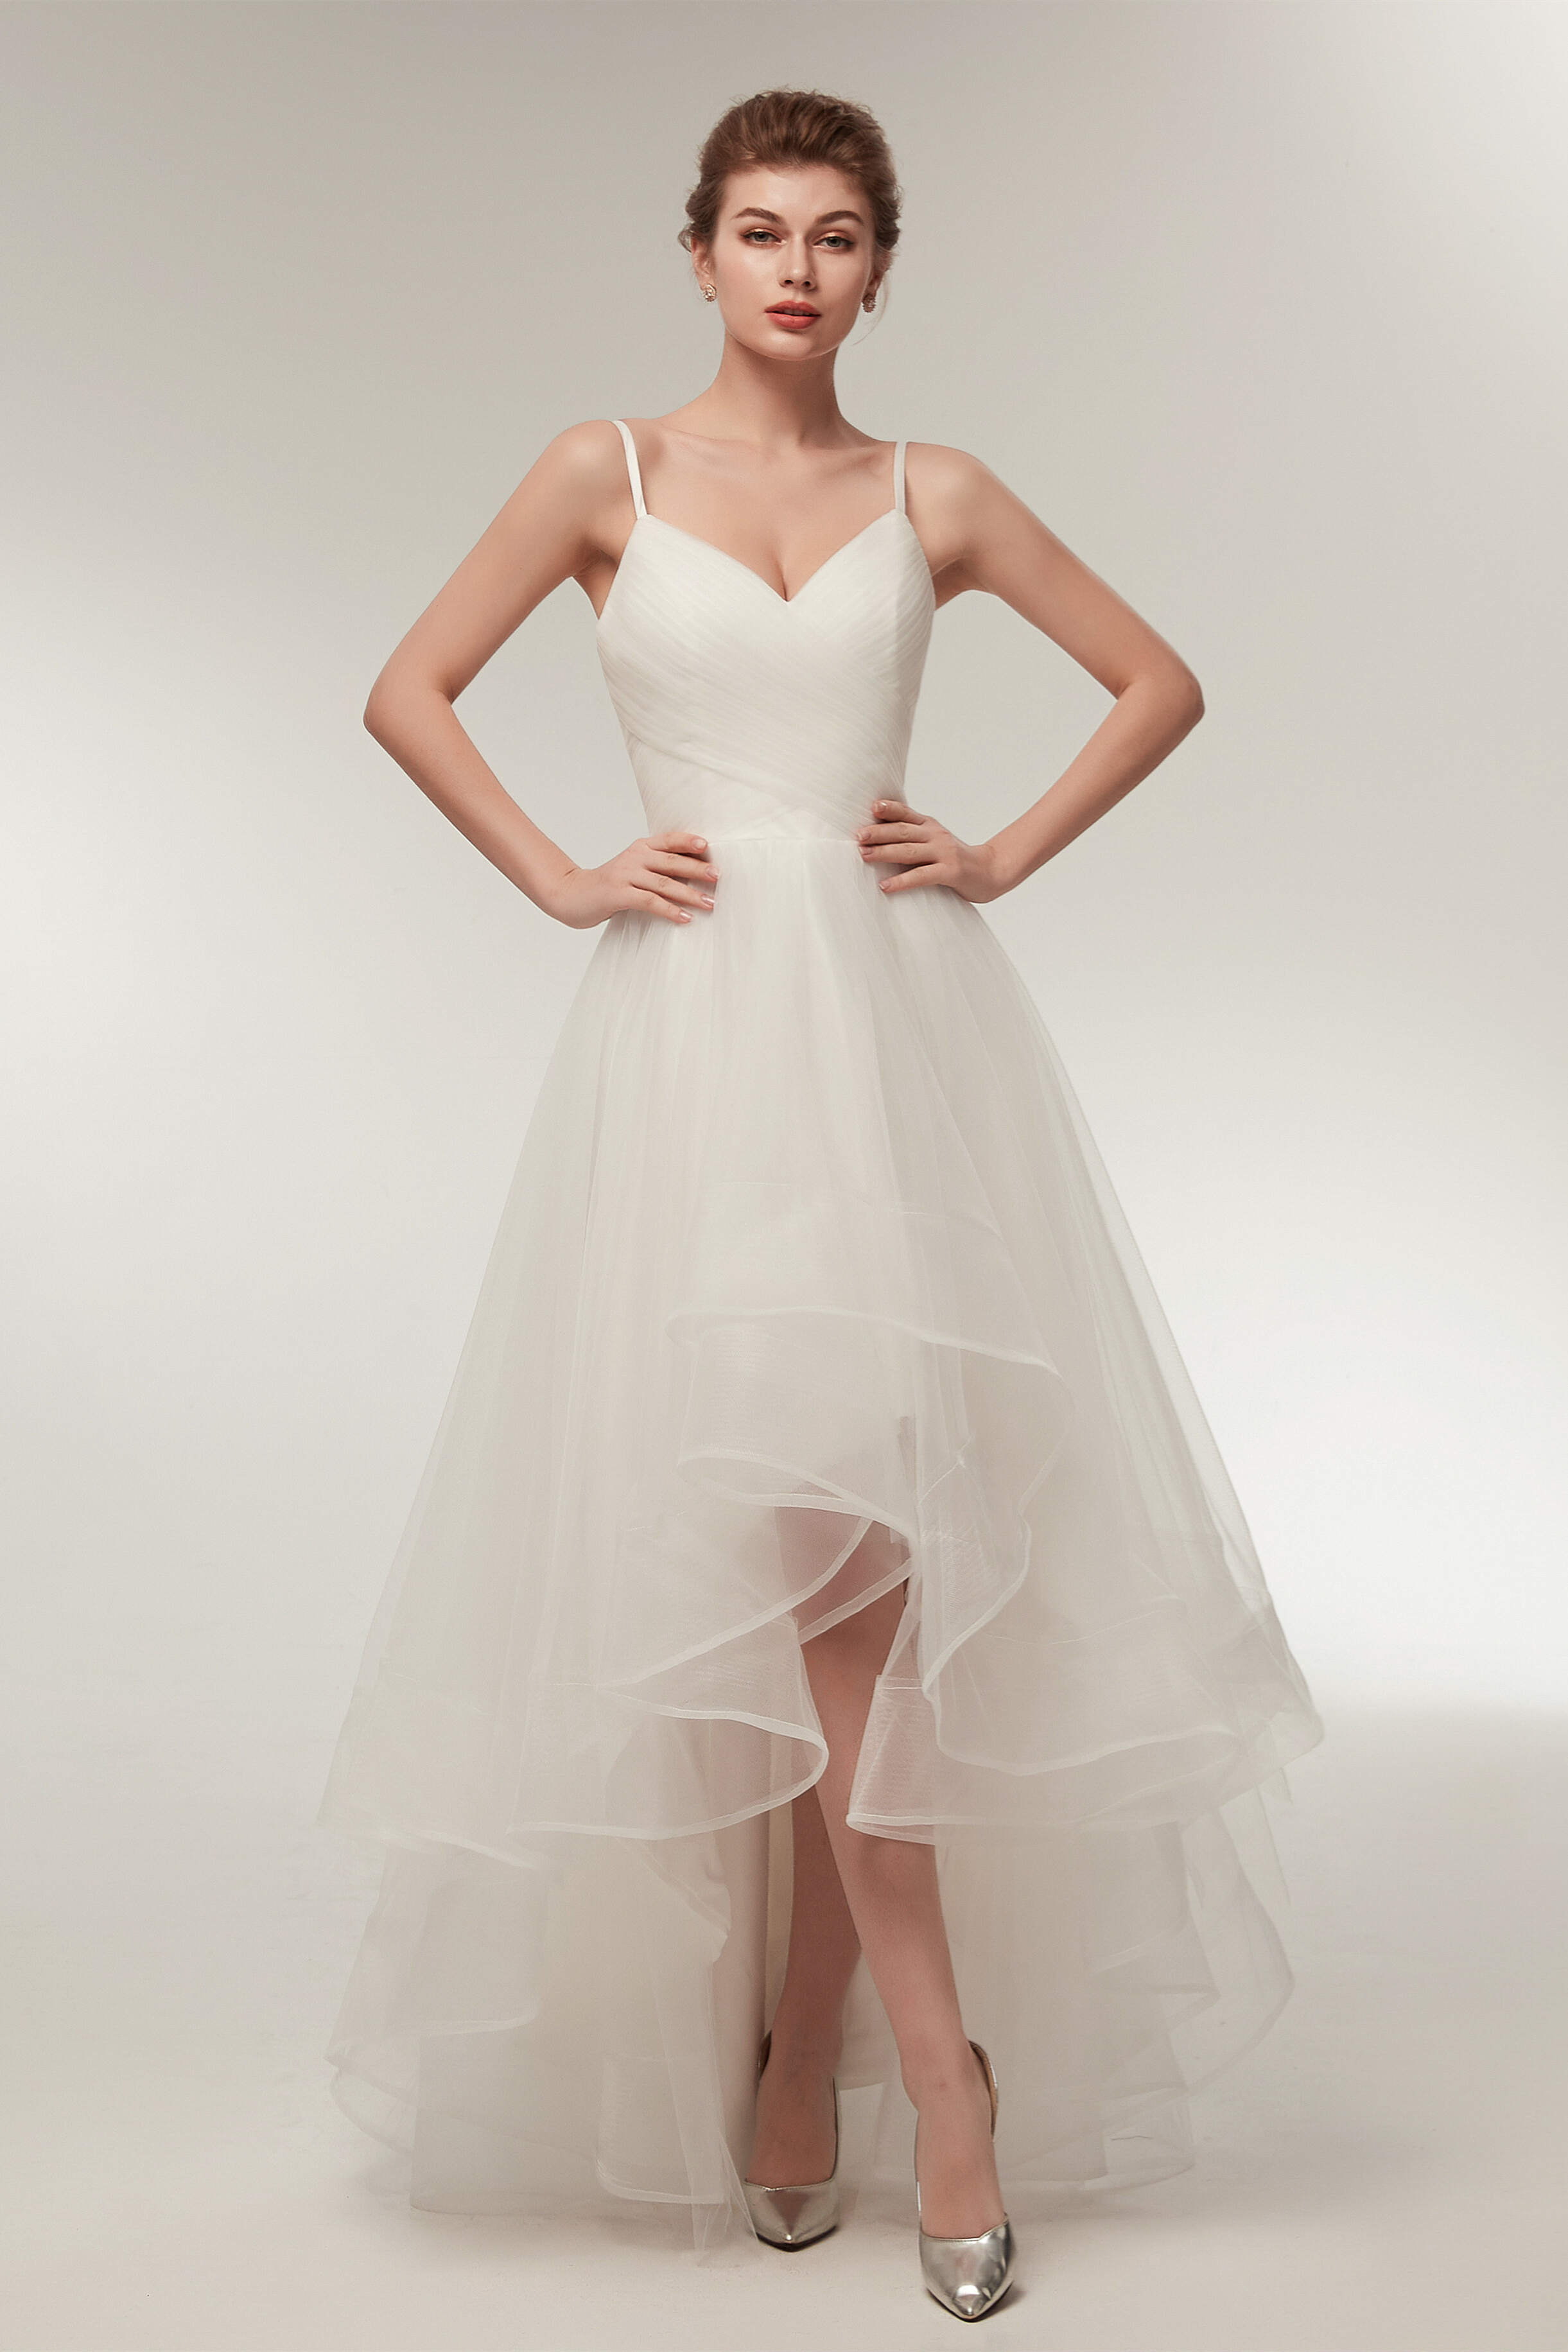 High Low Spaghetti Straps Minimalist Design Corset Wedding Dresses outfit, Wedding Dress Style 2028